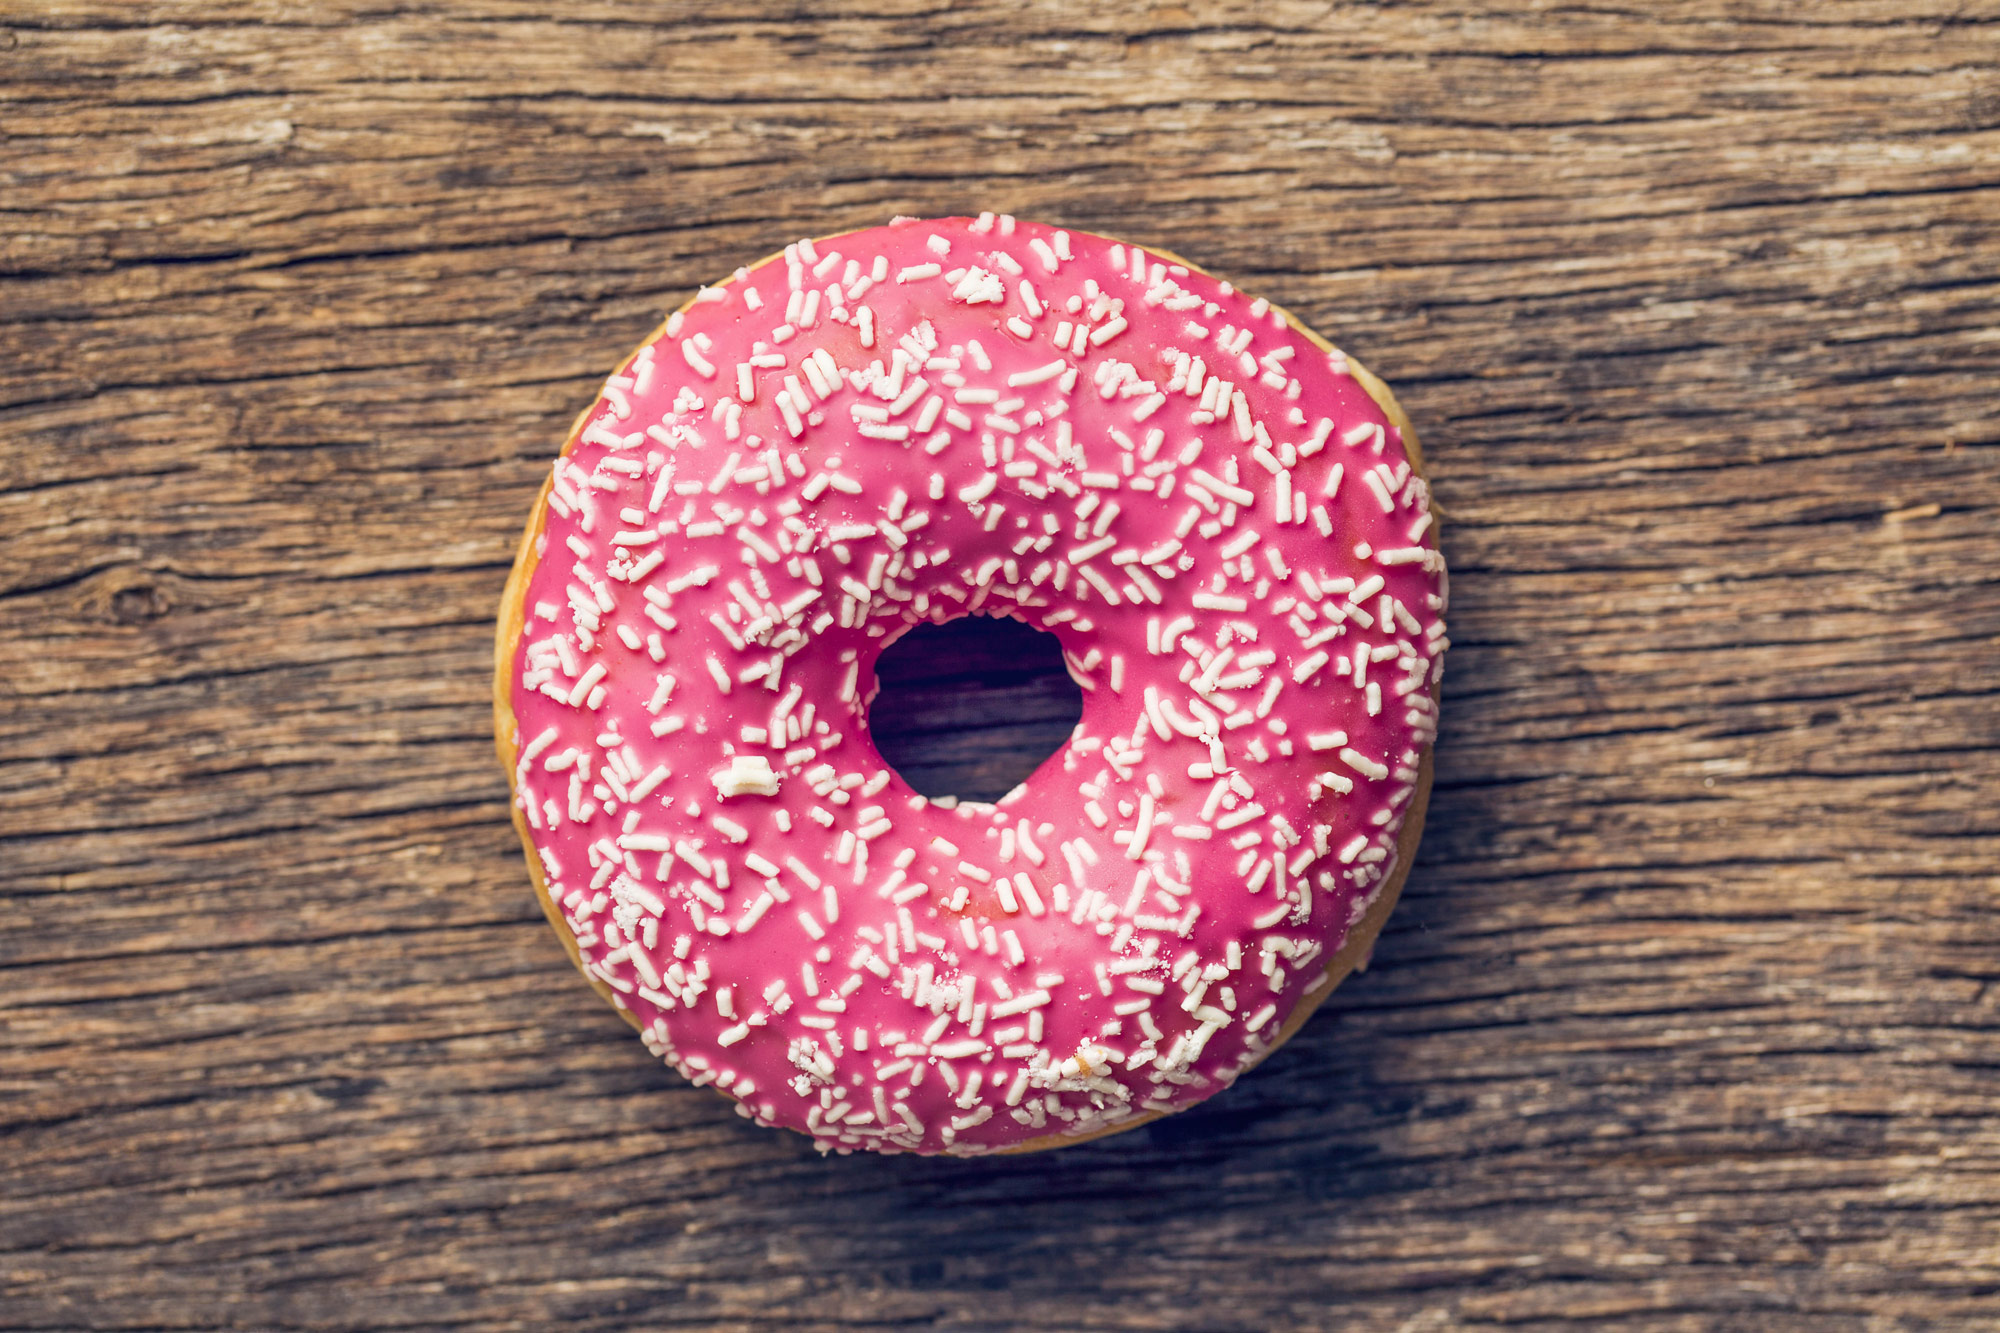 Image of a doughnut